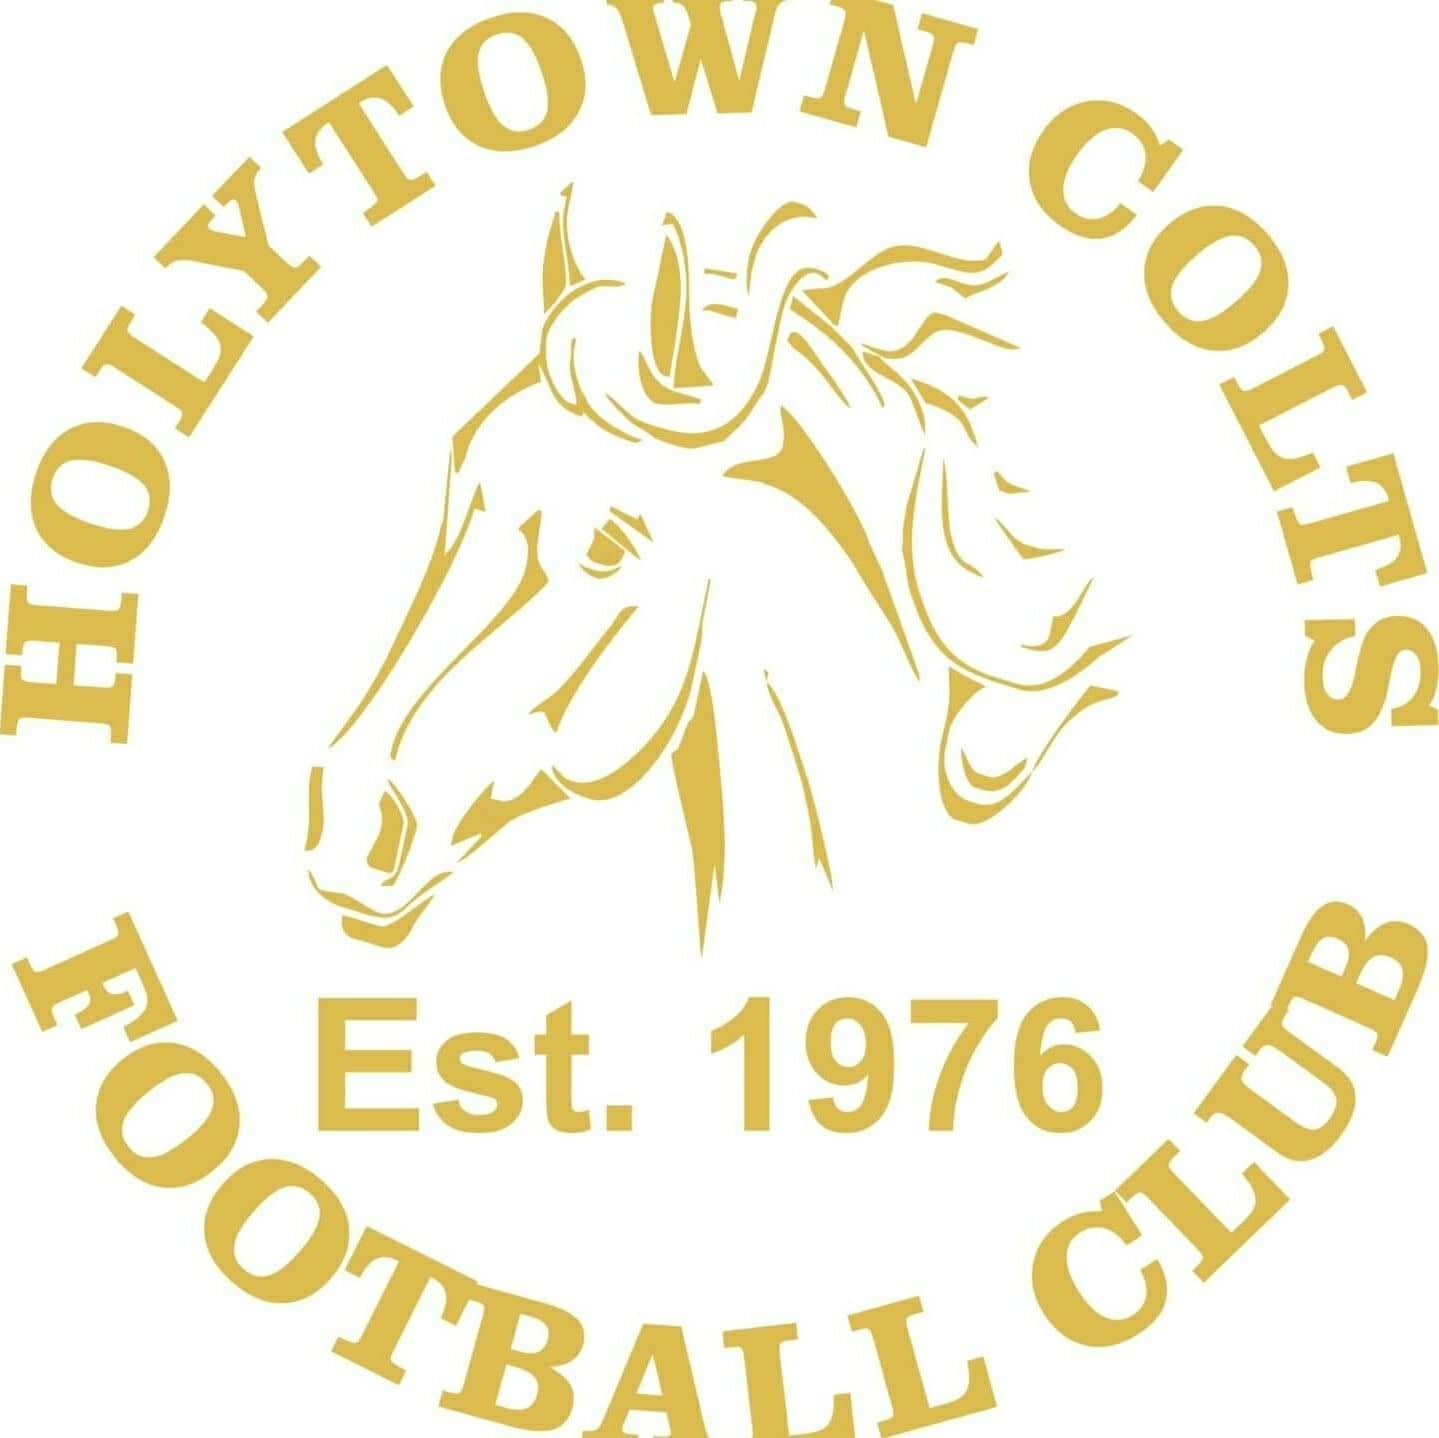 Holytown Colts logo